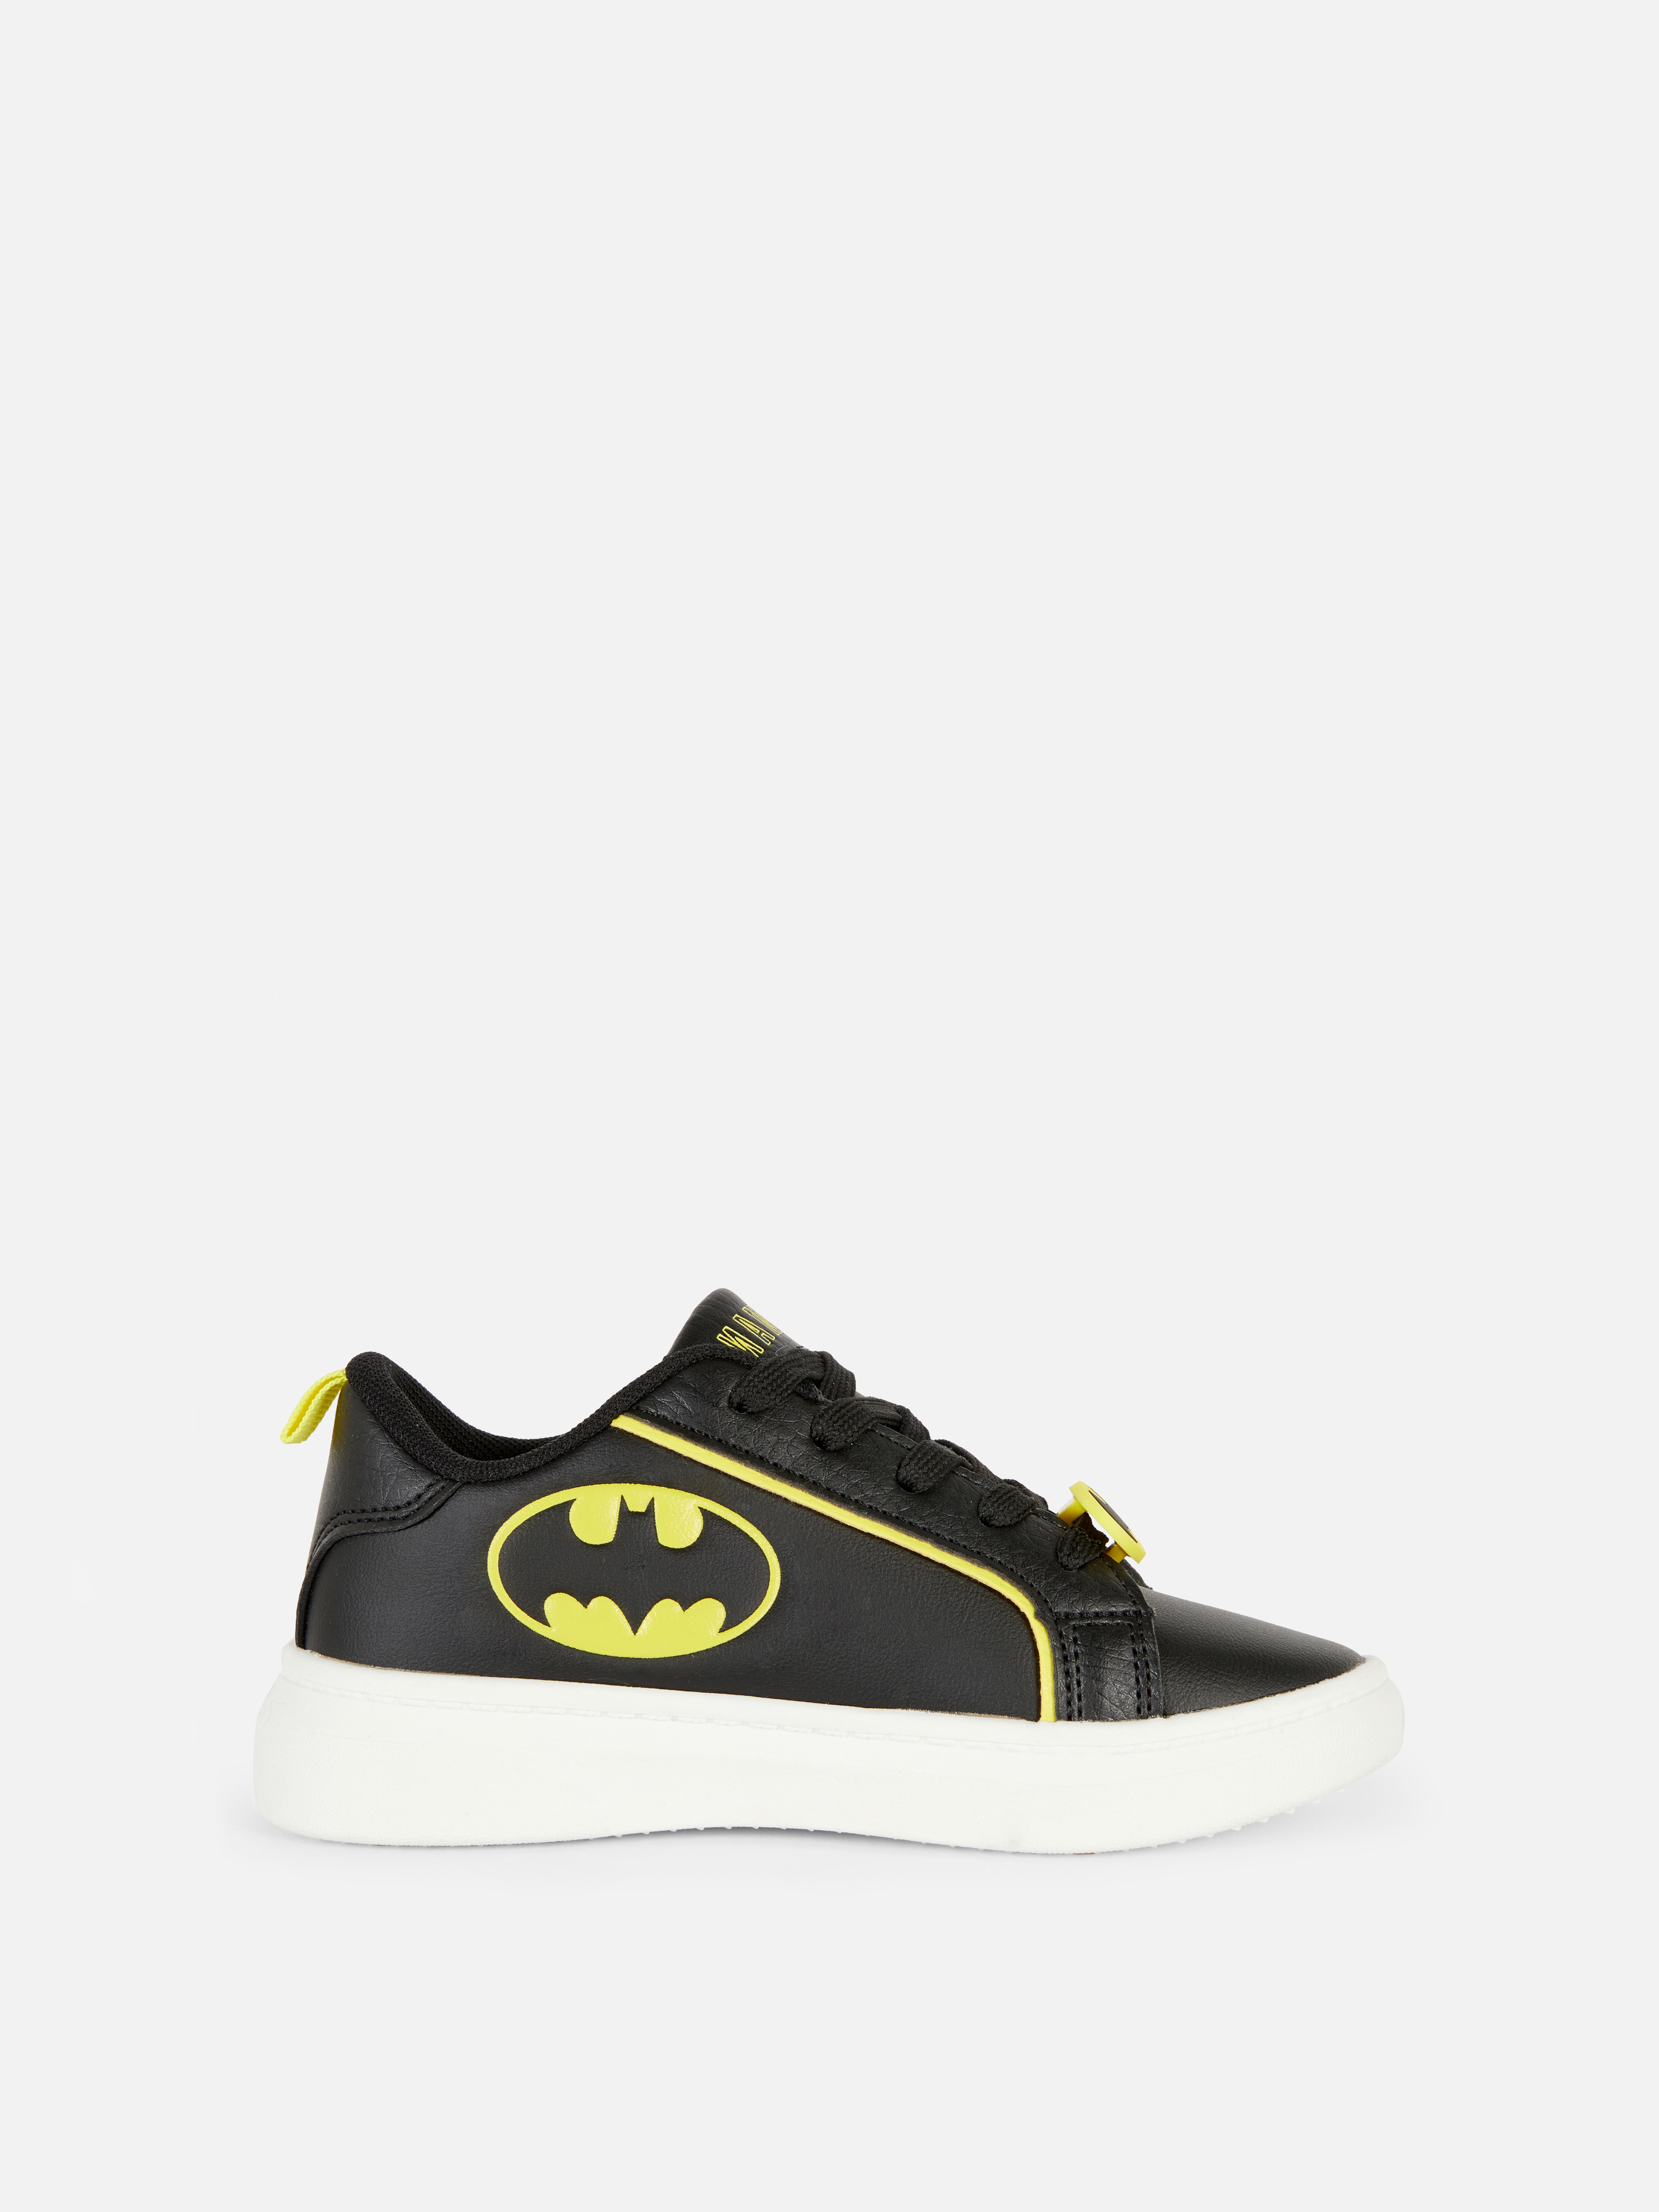 Zapatillas de caña baja de Batman